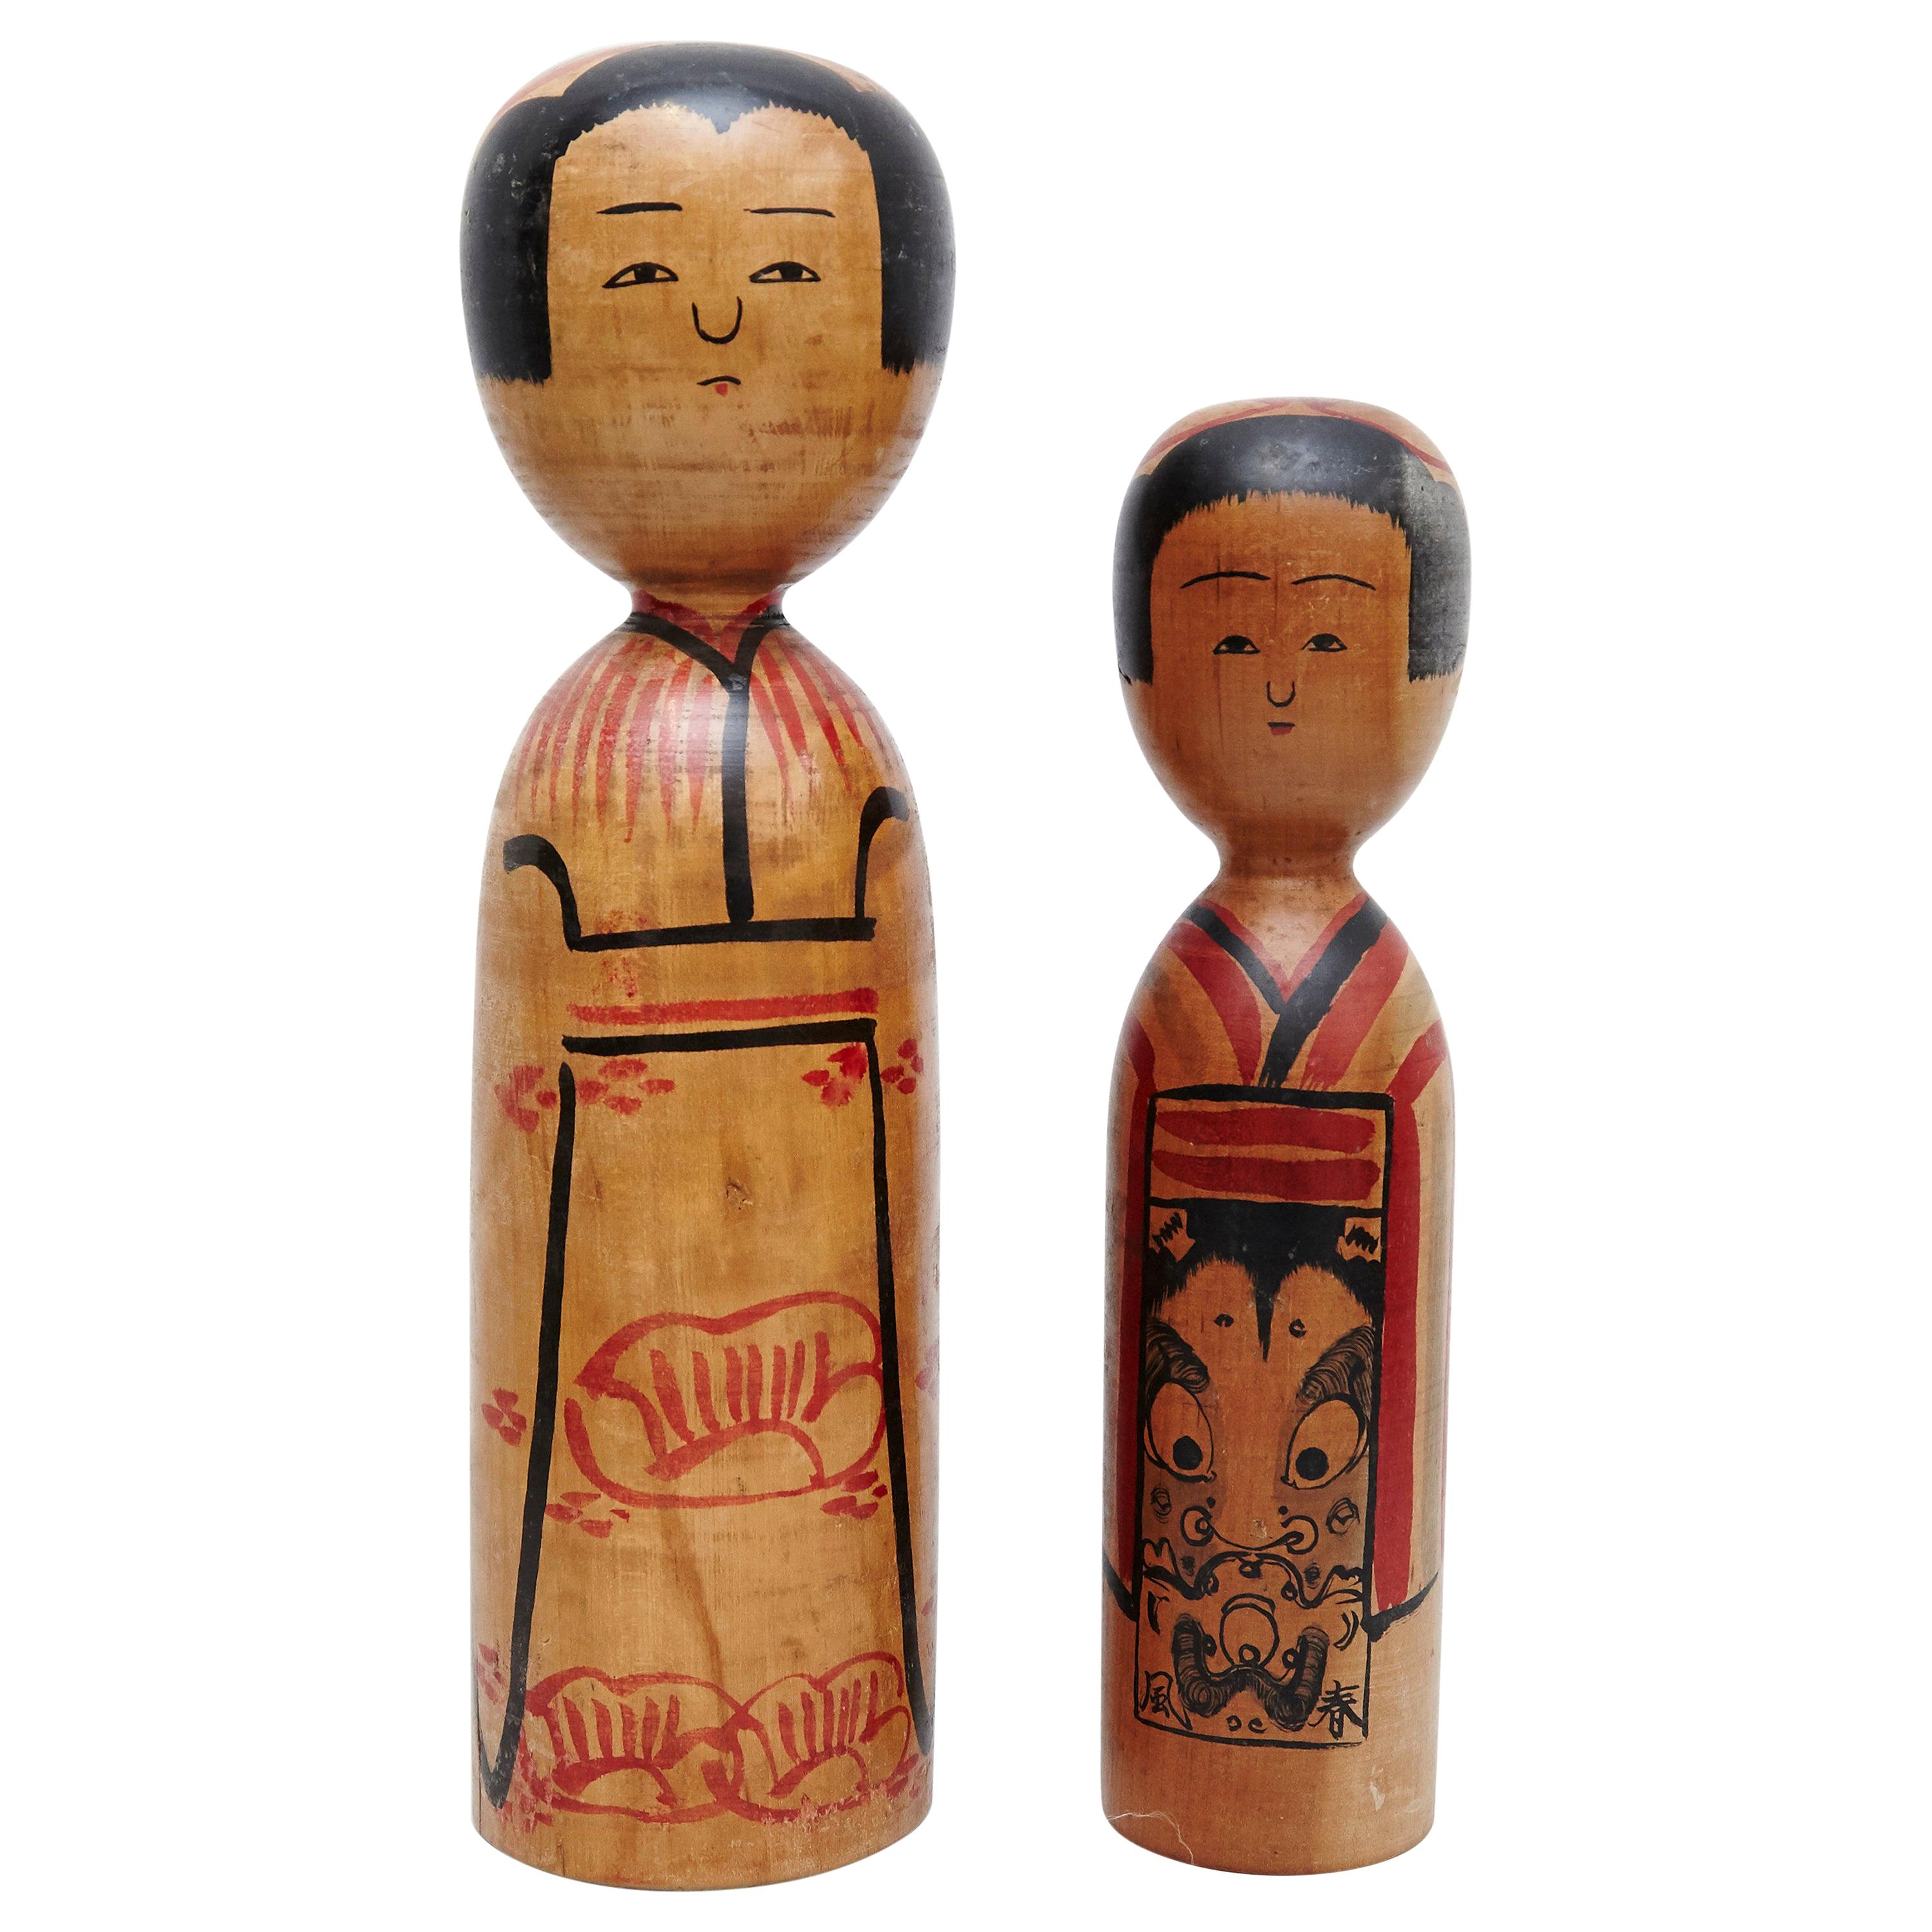 Vintage Japanese Wooden Bobble Head Kokeshi Doll 10cm tall.